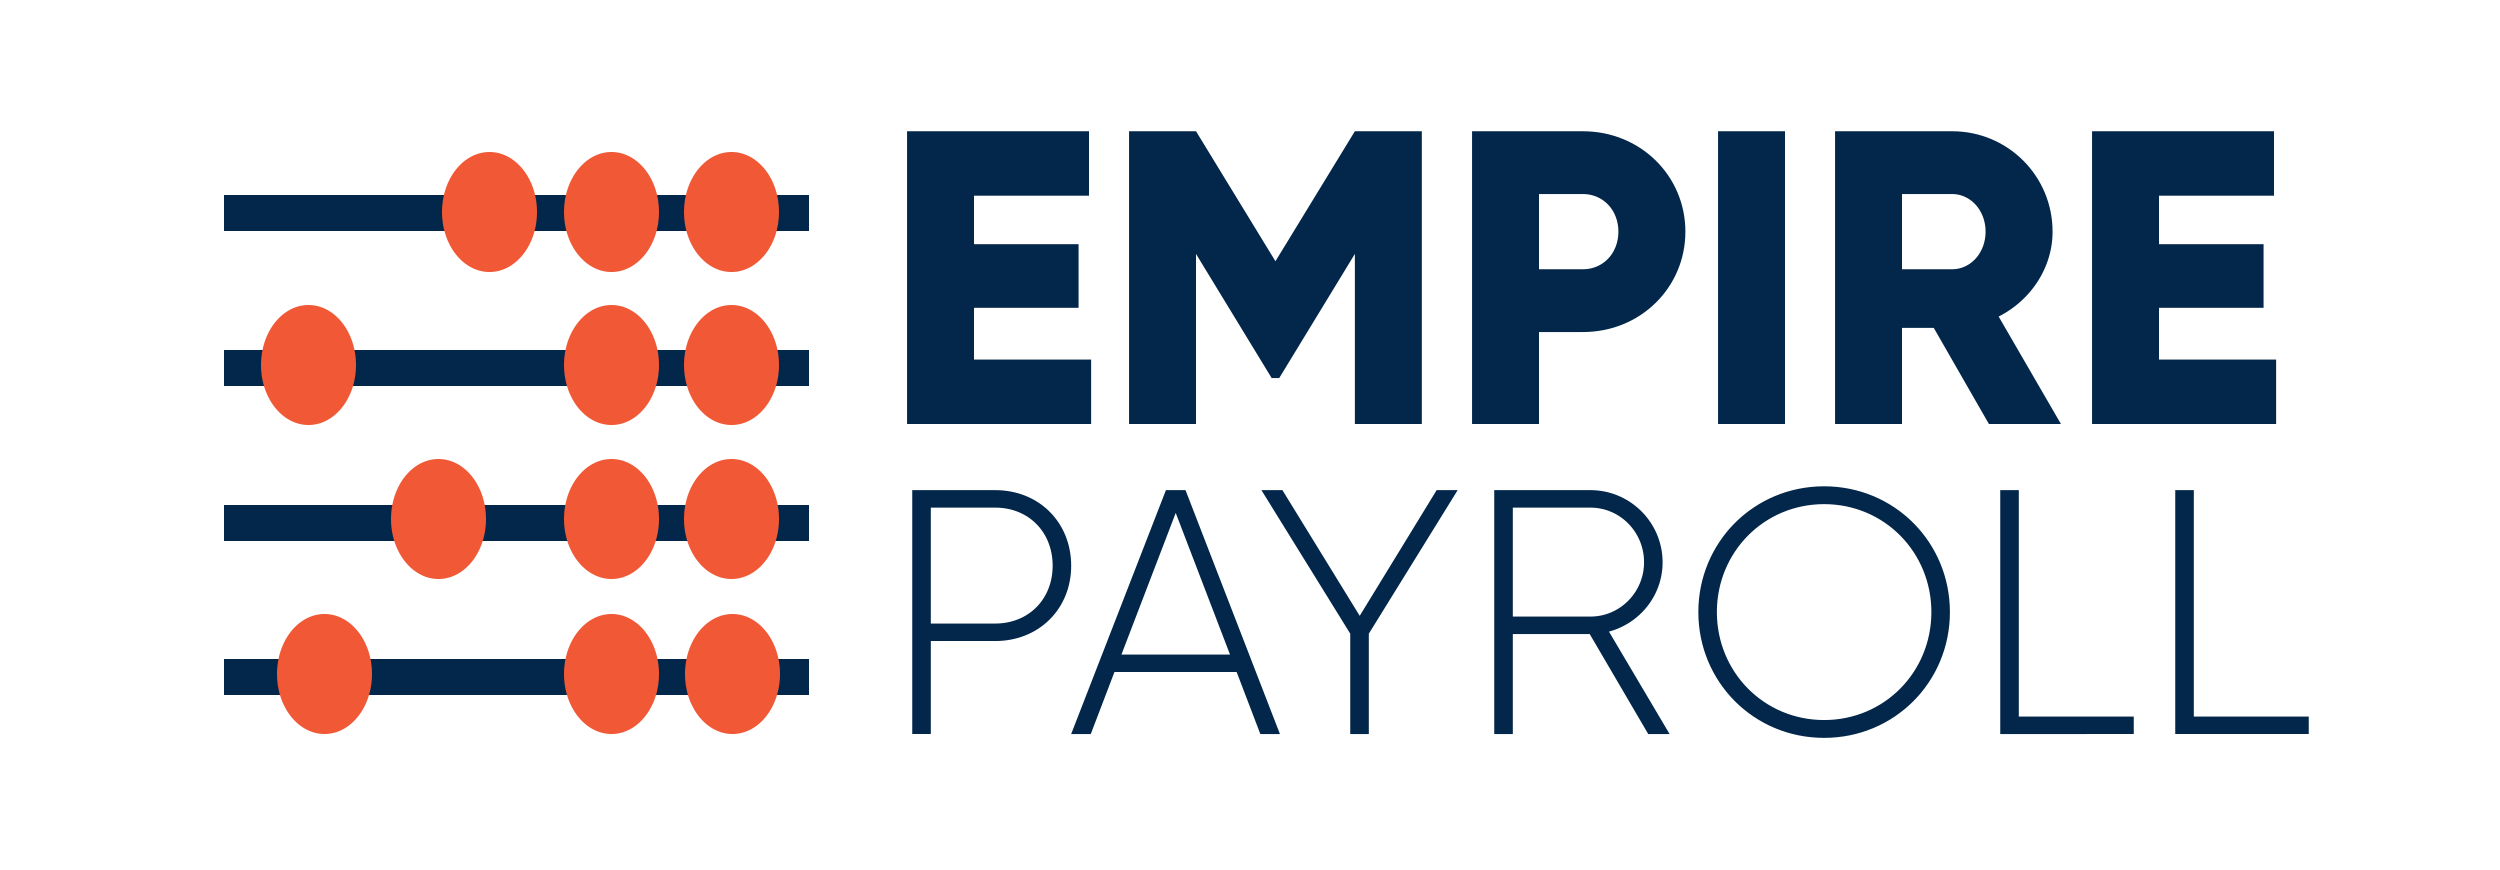 Empire Payroll